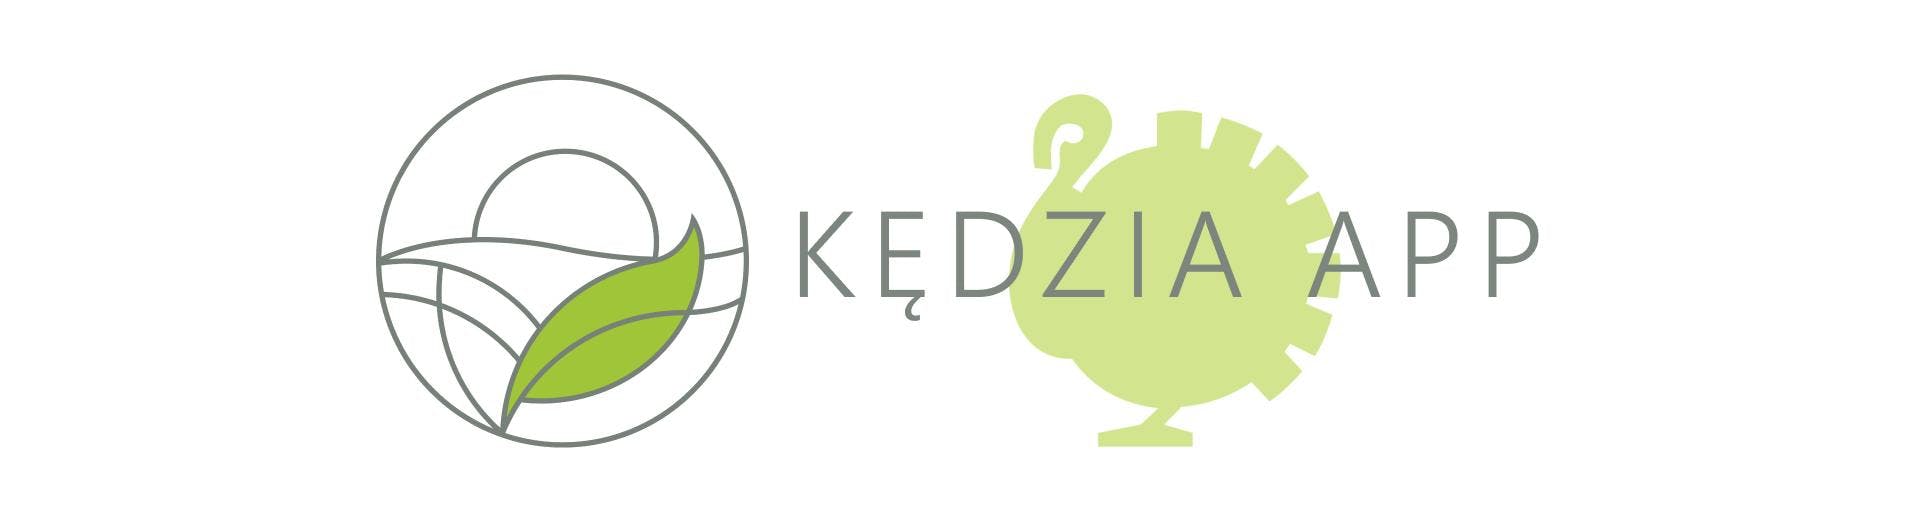 Banner with Kedzia App logo